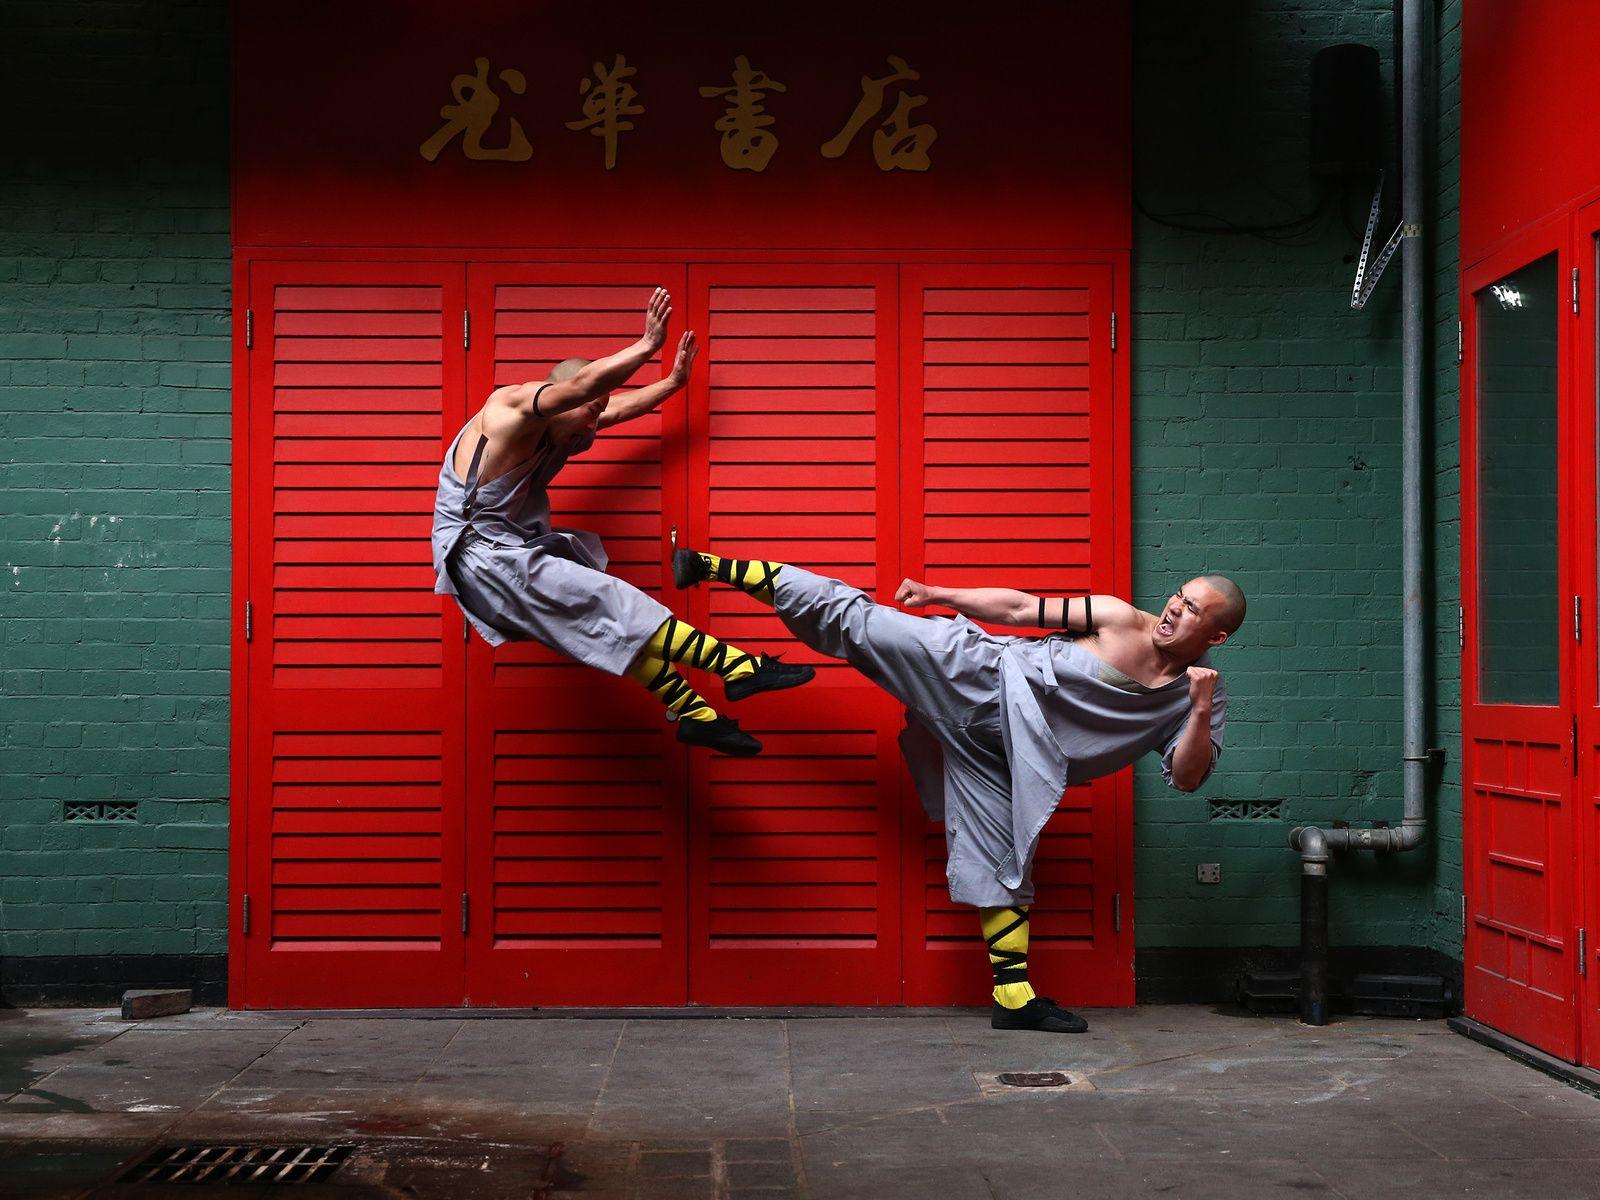 Shaolin Kung Fu Wallpapers